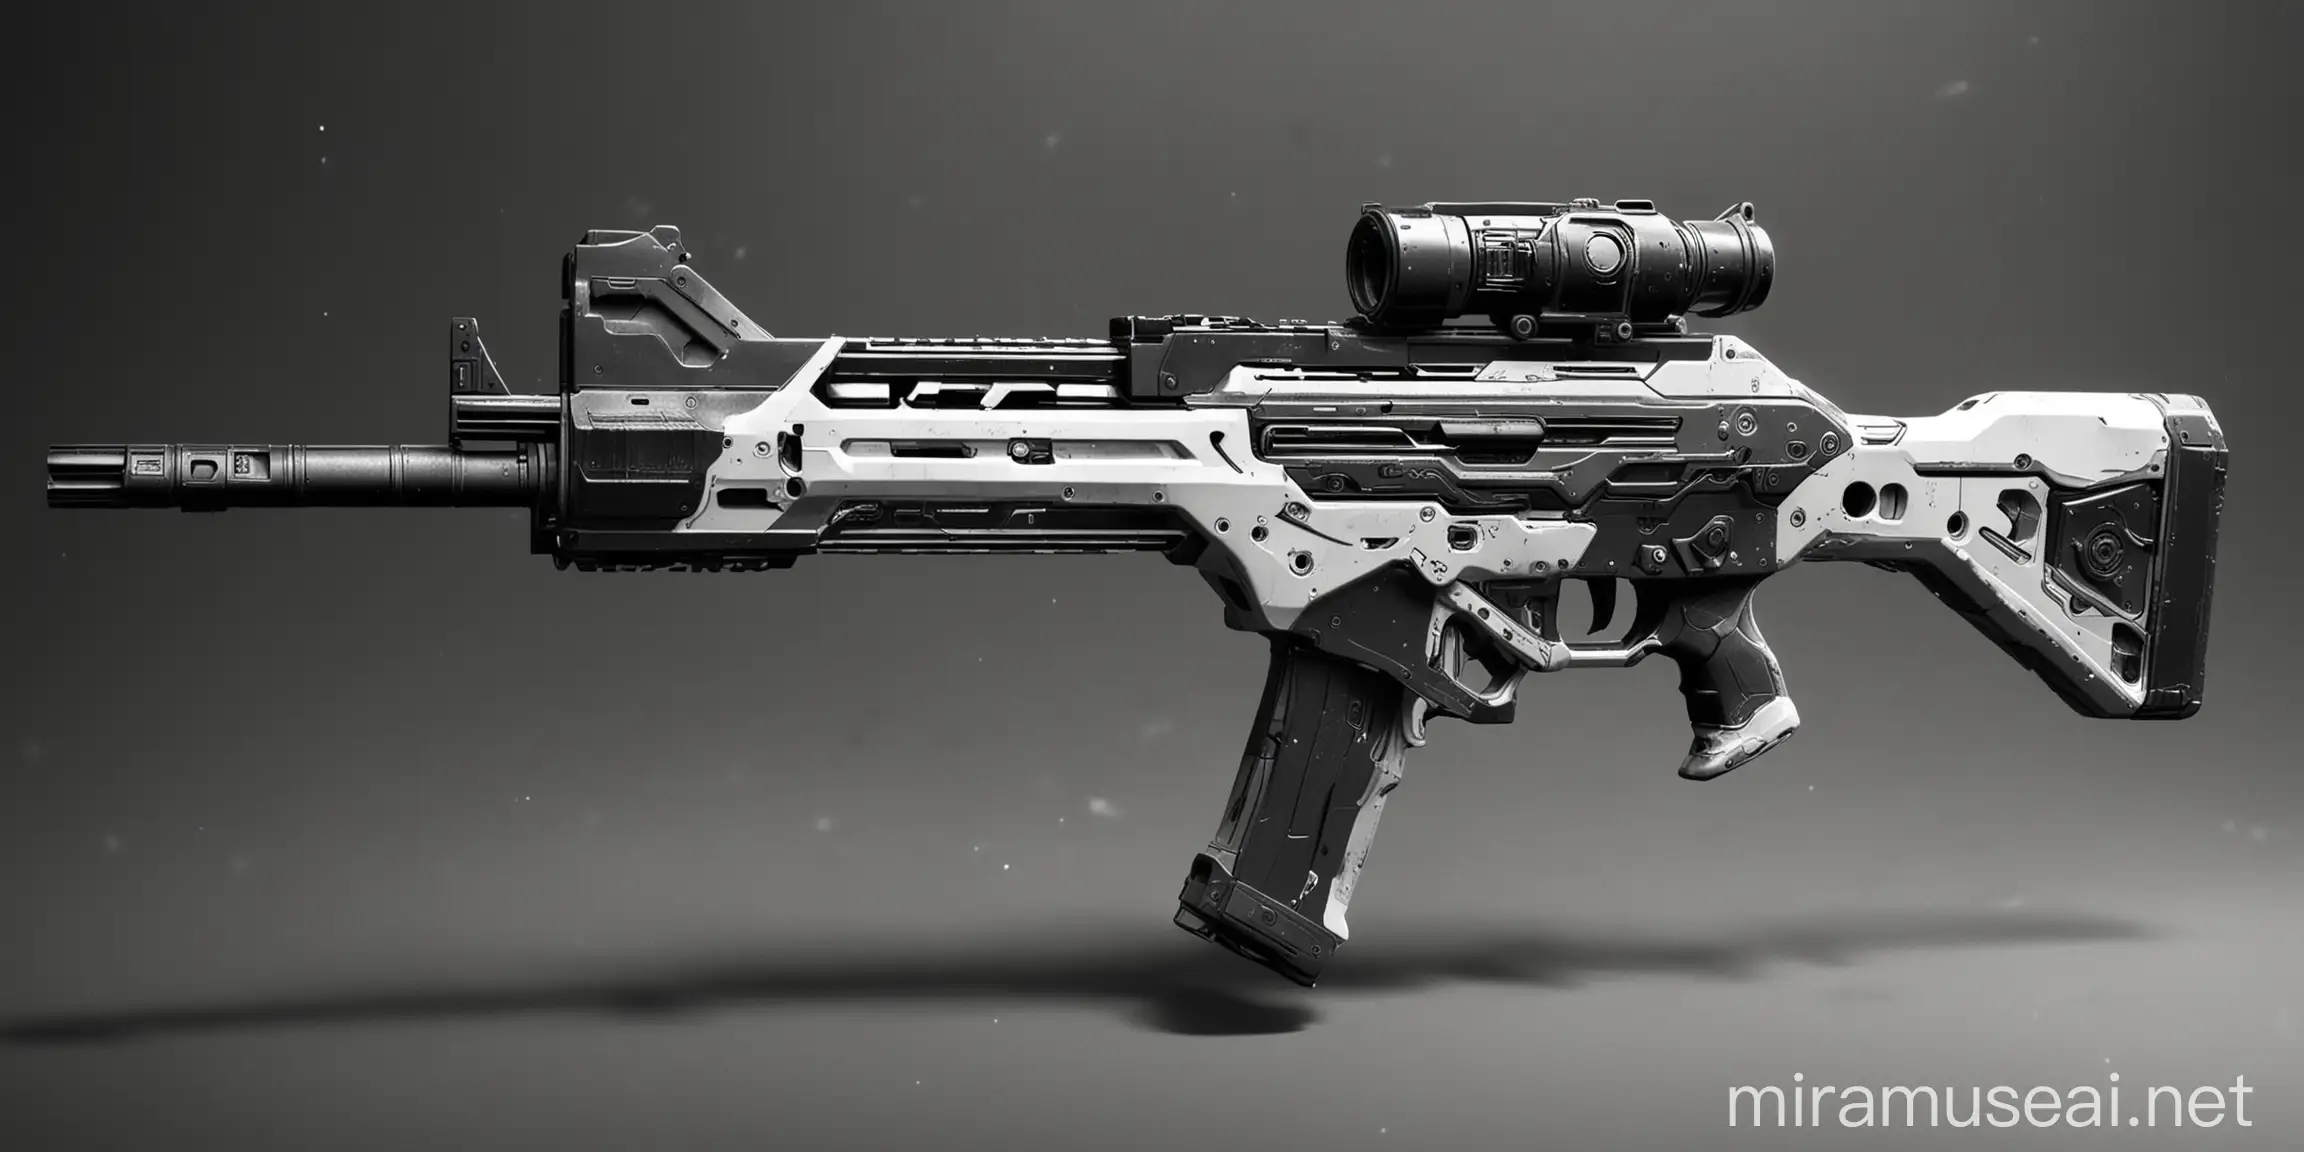 Futuristic Destiny 2 Assault Rifle in Striking Monochrome